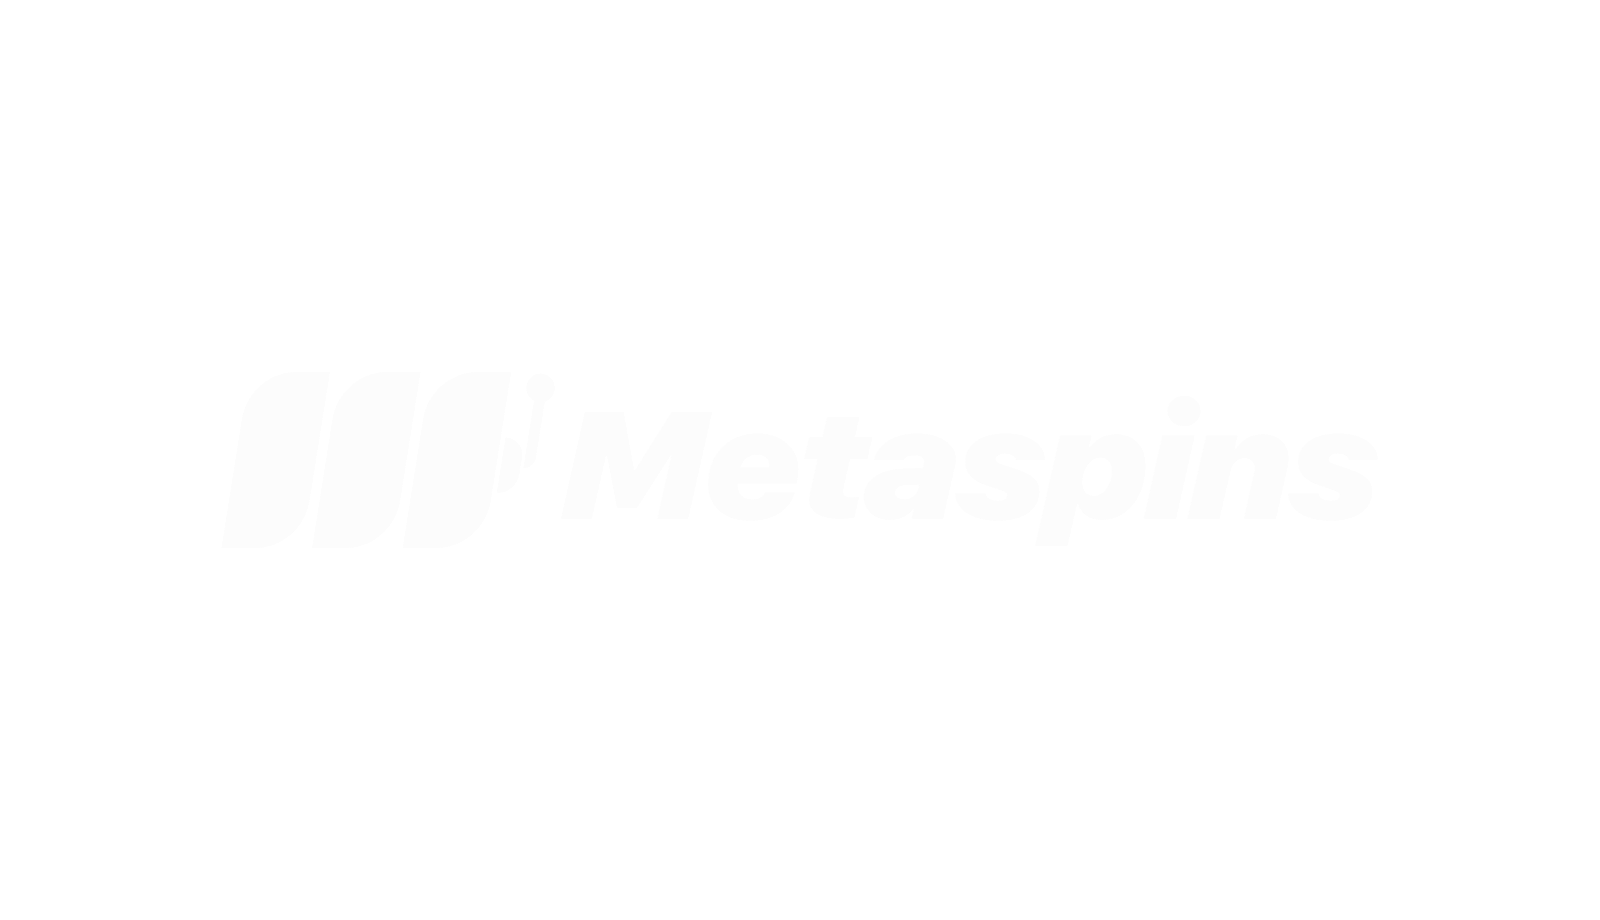 Metaspins Casino